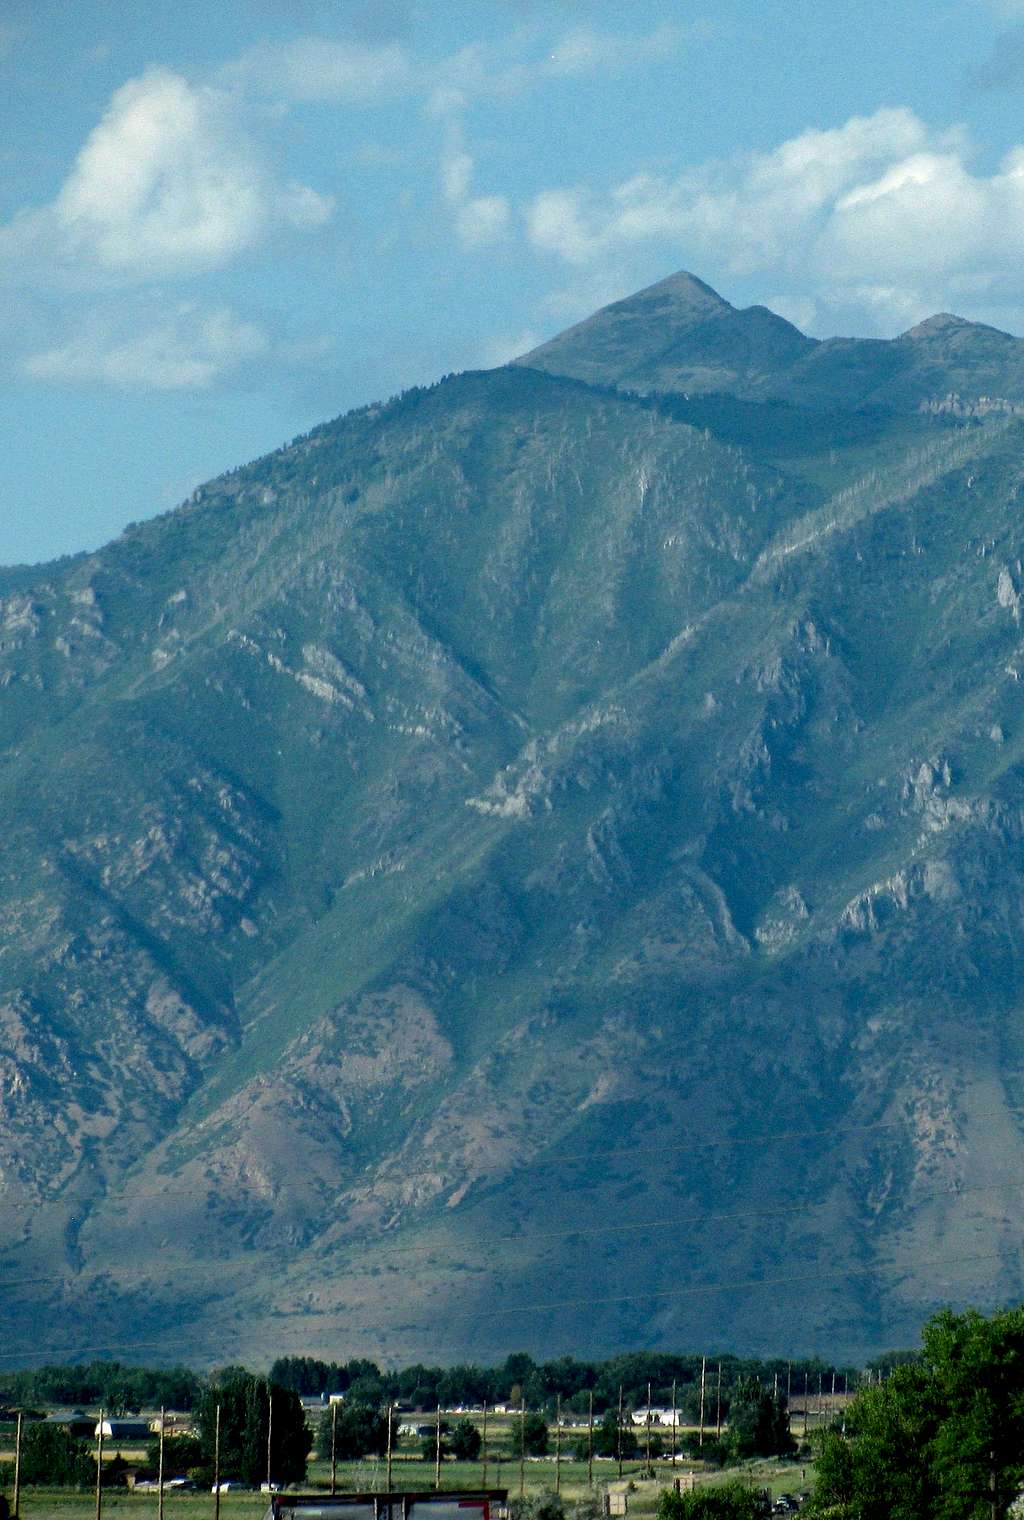 Provo Peak & Maple Mountain from I-15